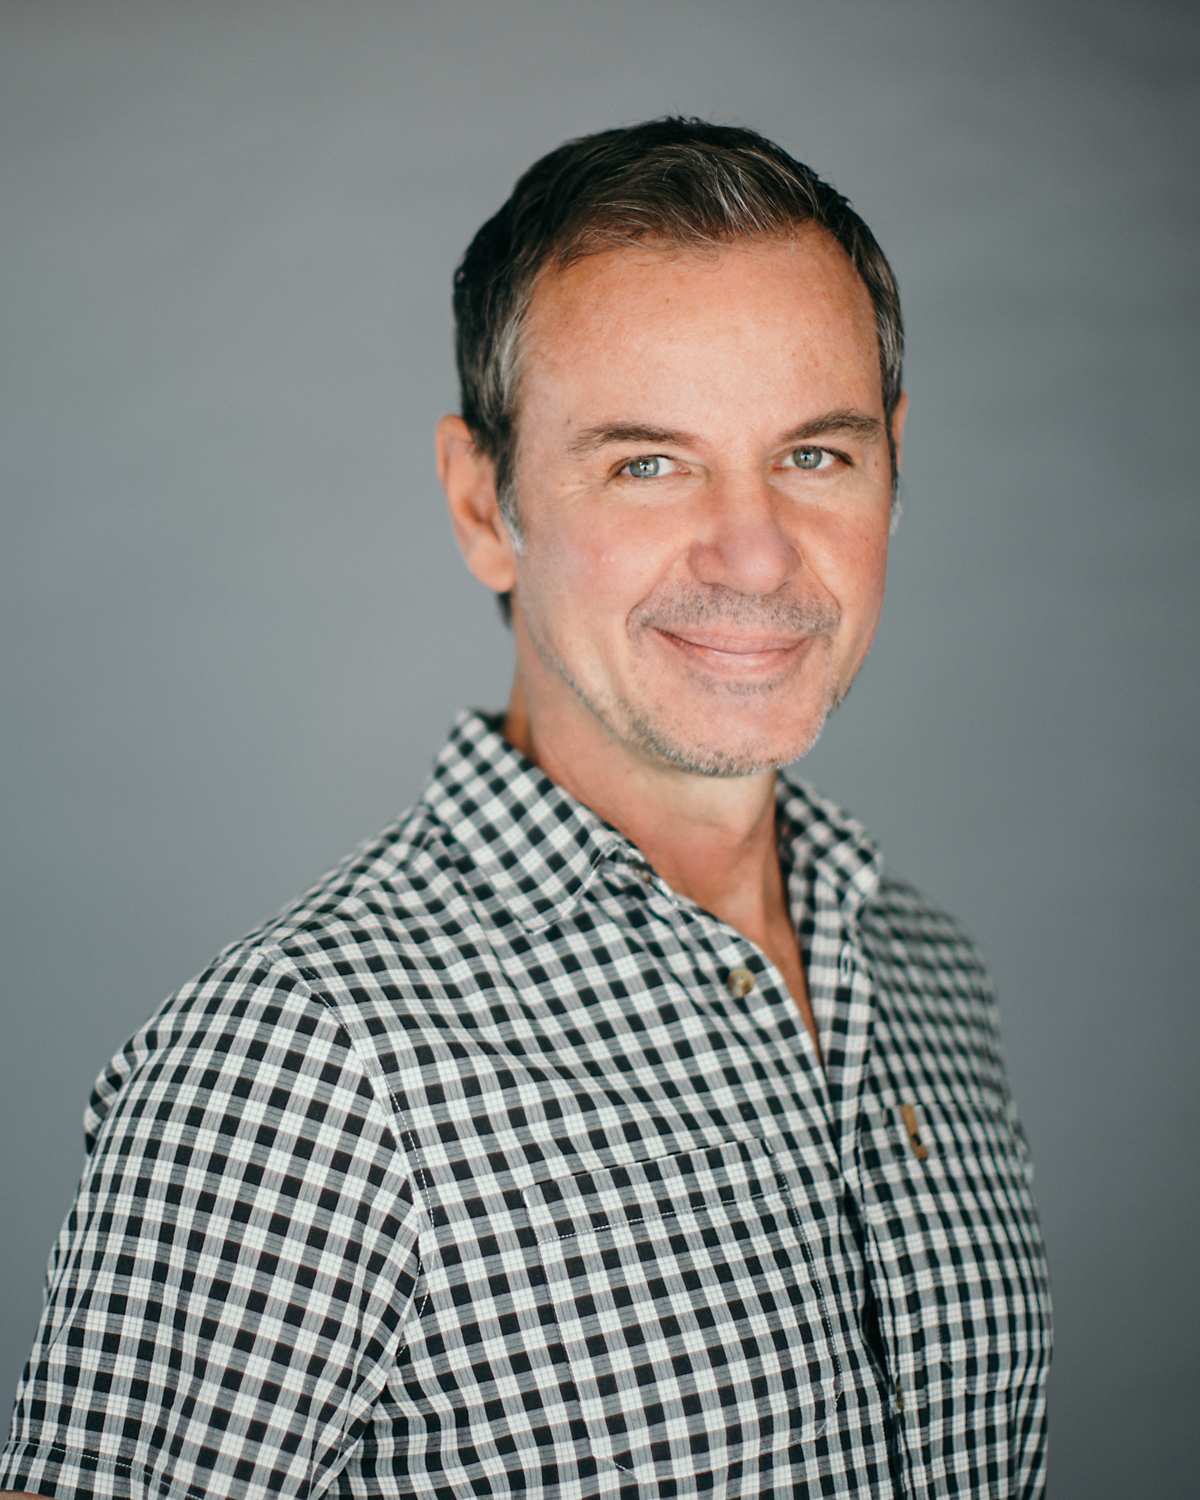 John Sparrow, Sales Representative in Revelstoke, CENTURY 21 Canada